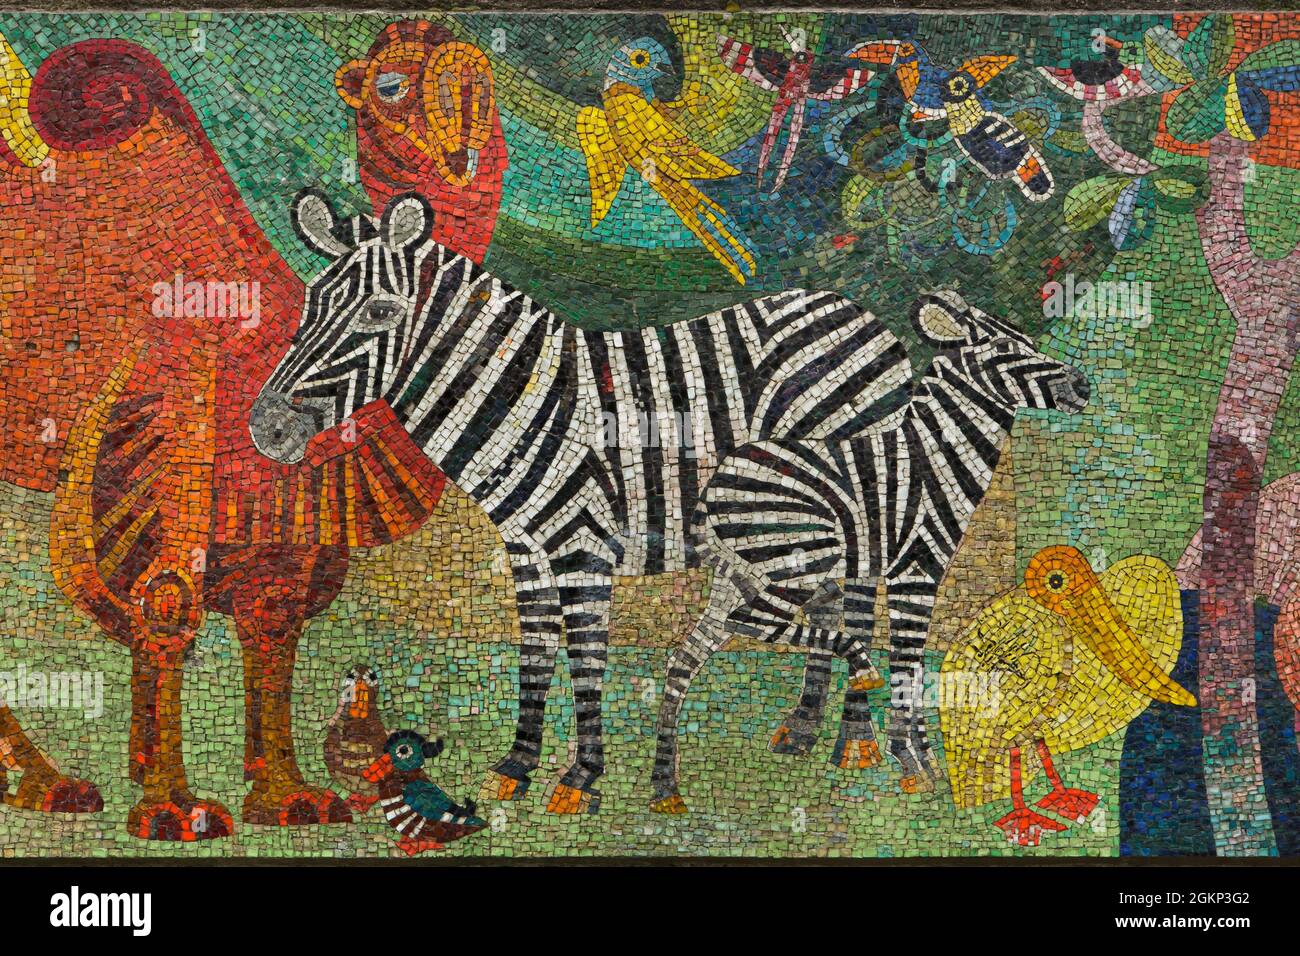 Zoological garden depicted in the street mosaic by Czech artist Radomír Kolář (1980) in Vršovice district in Prague, Czech Republic. Stock Photo